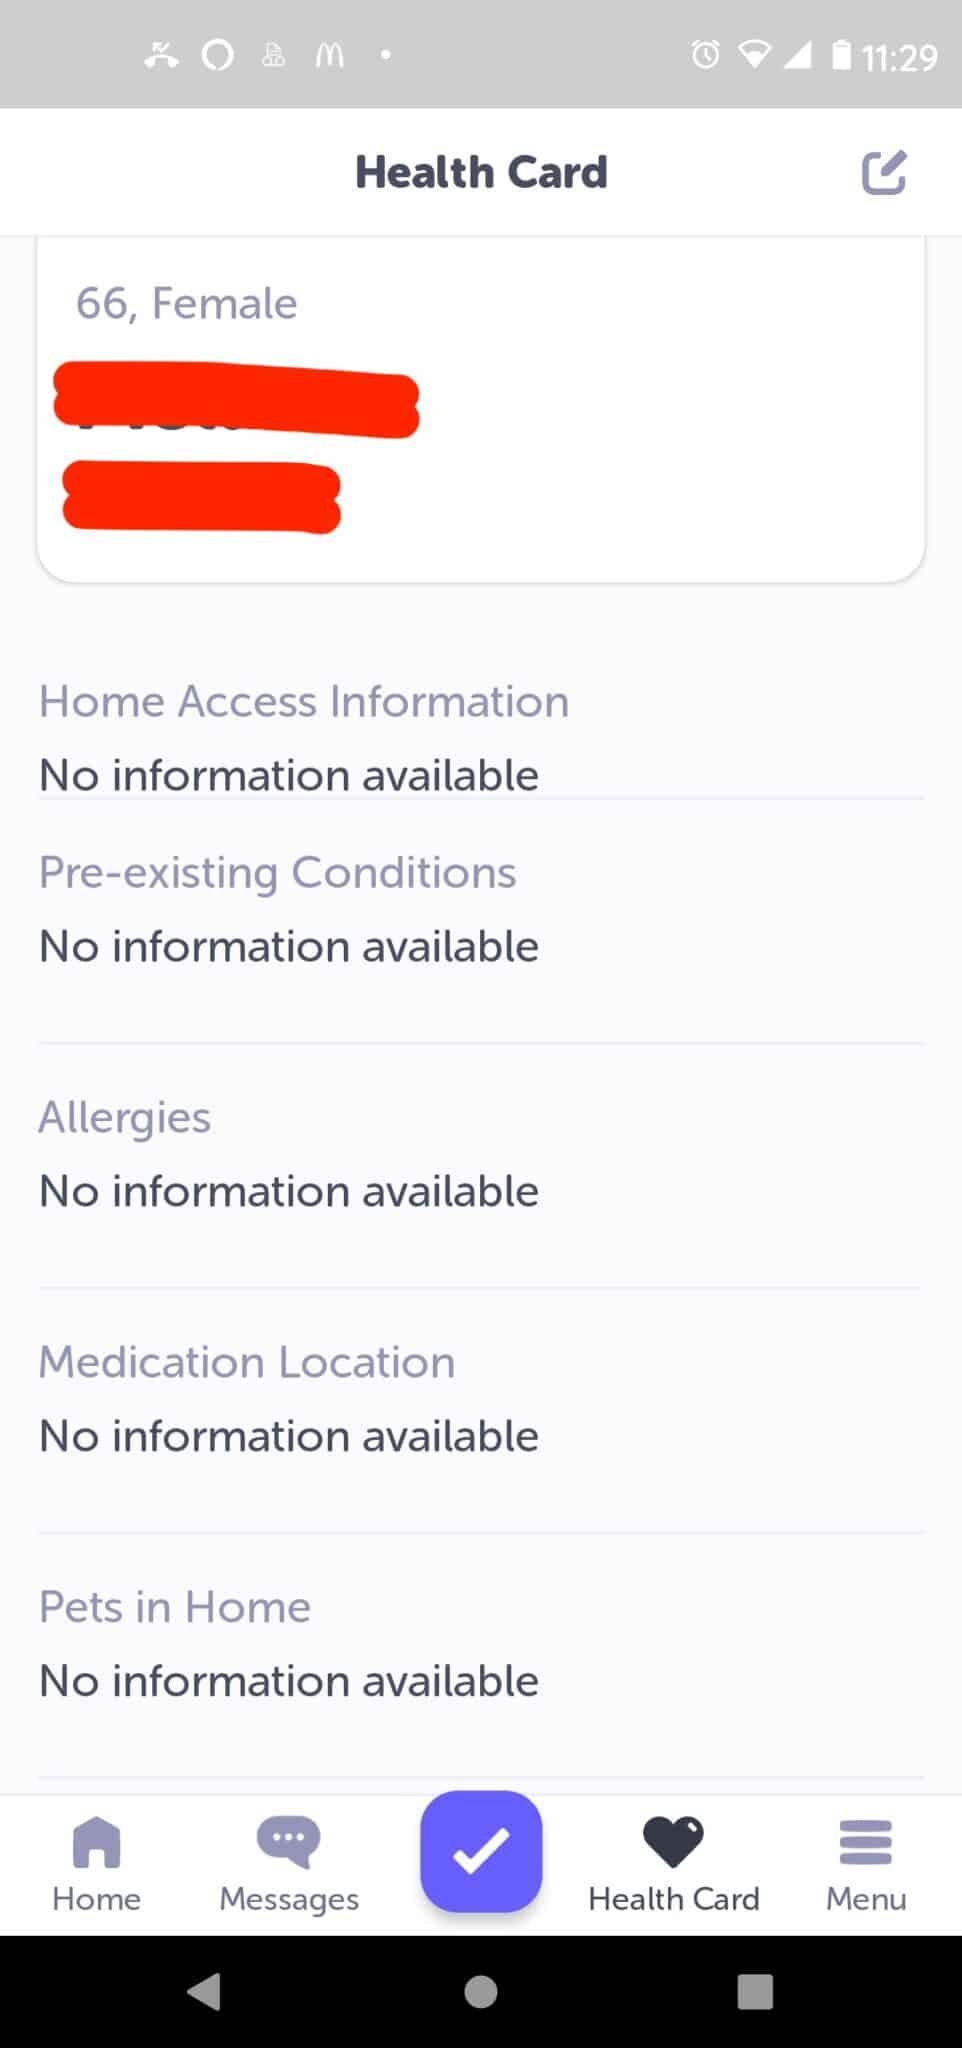 Health Card feature in the Aloe Care Health app.